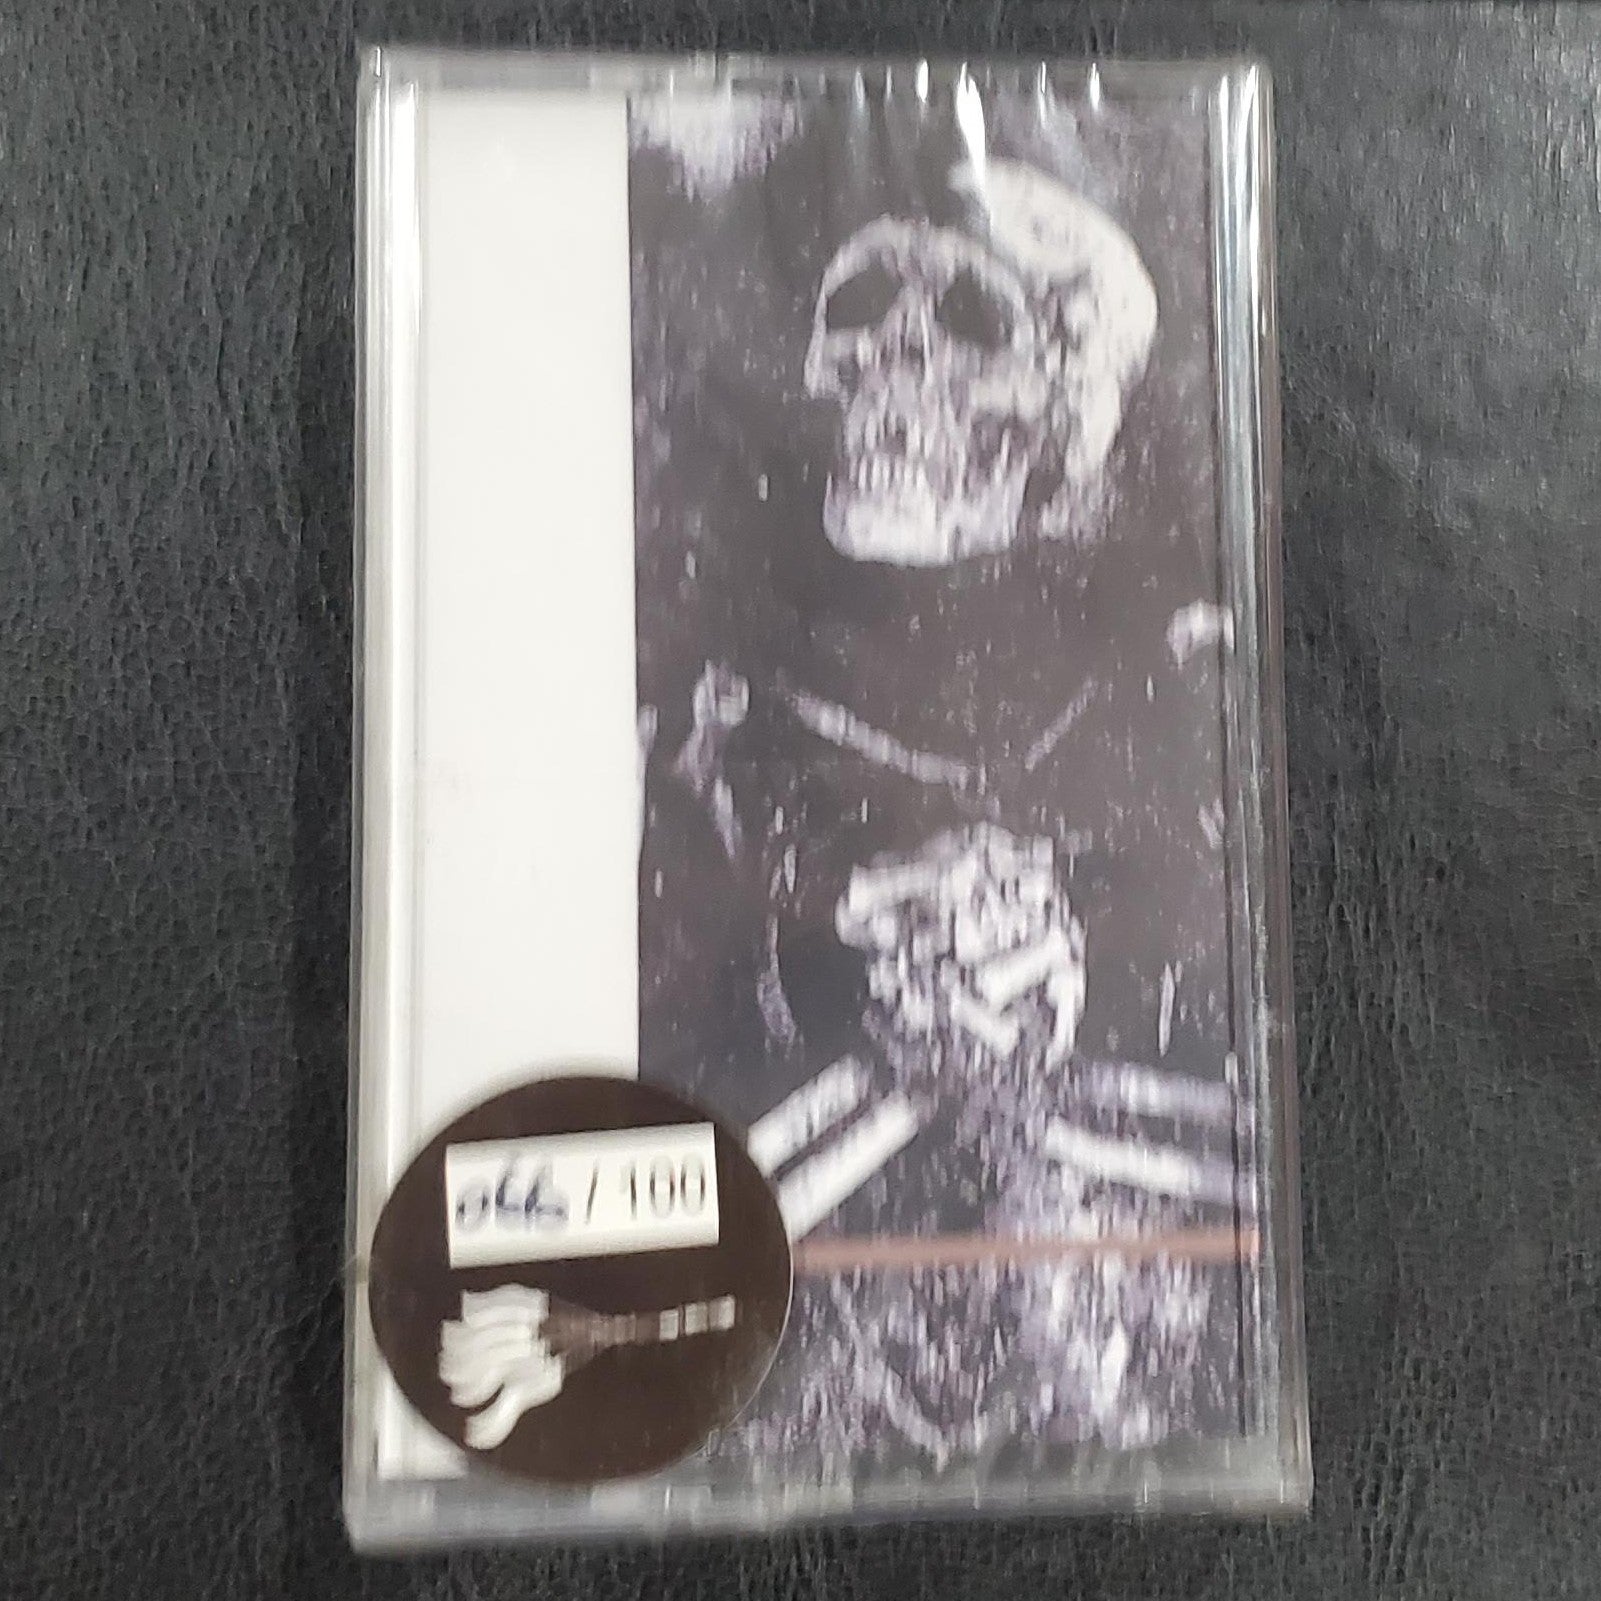 Mhönos – Humiliati Cassette Tape